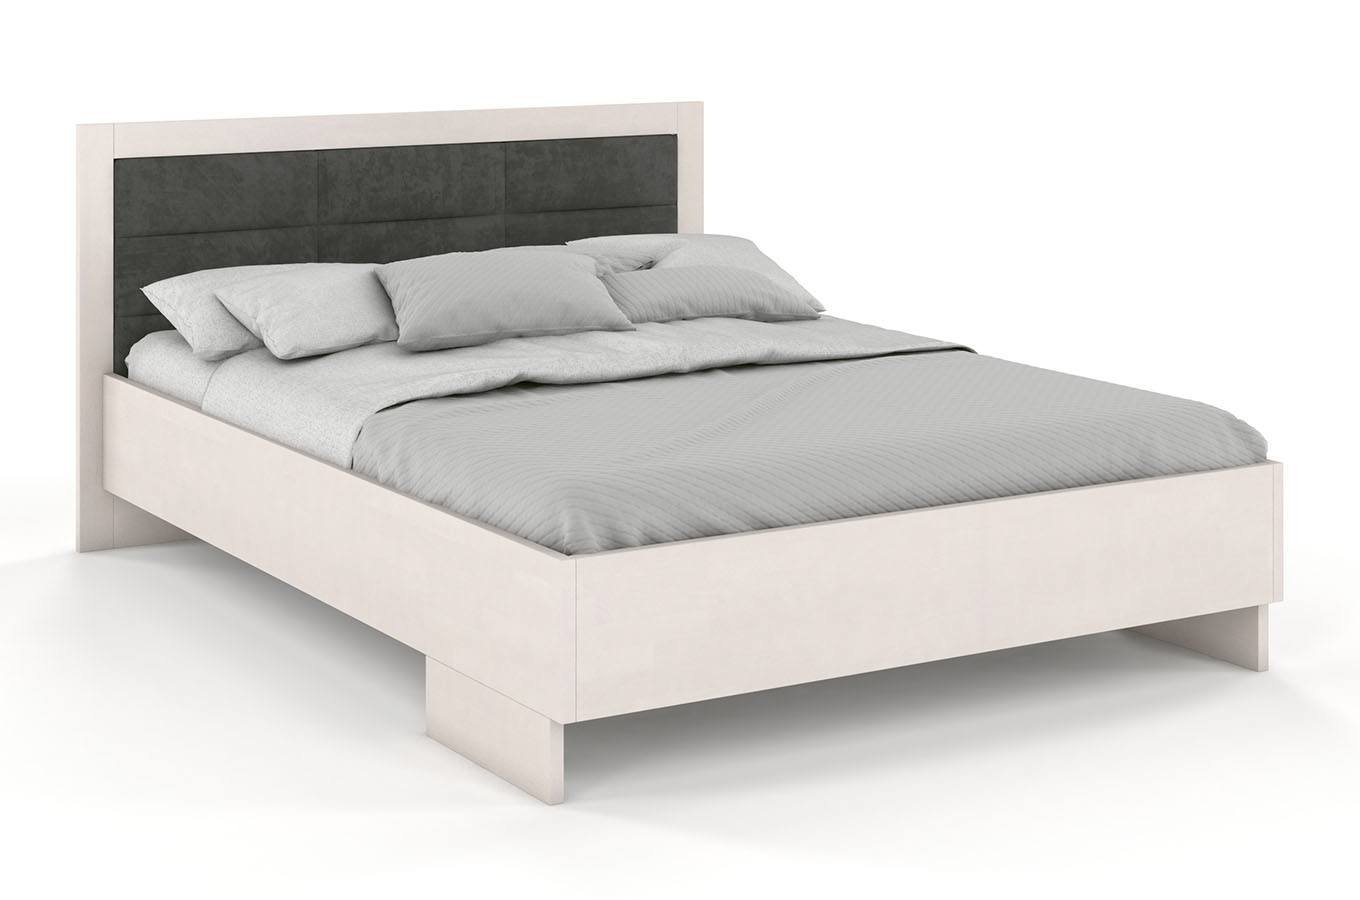 Buková postel Kalmar High čalounění a úložný prostor - bílá 140 x 200 cm, Casablanca 2301